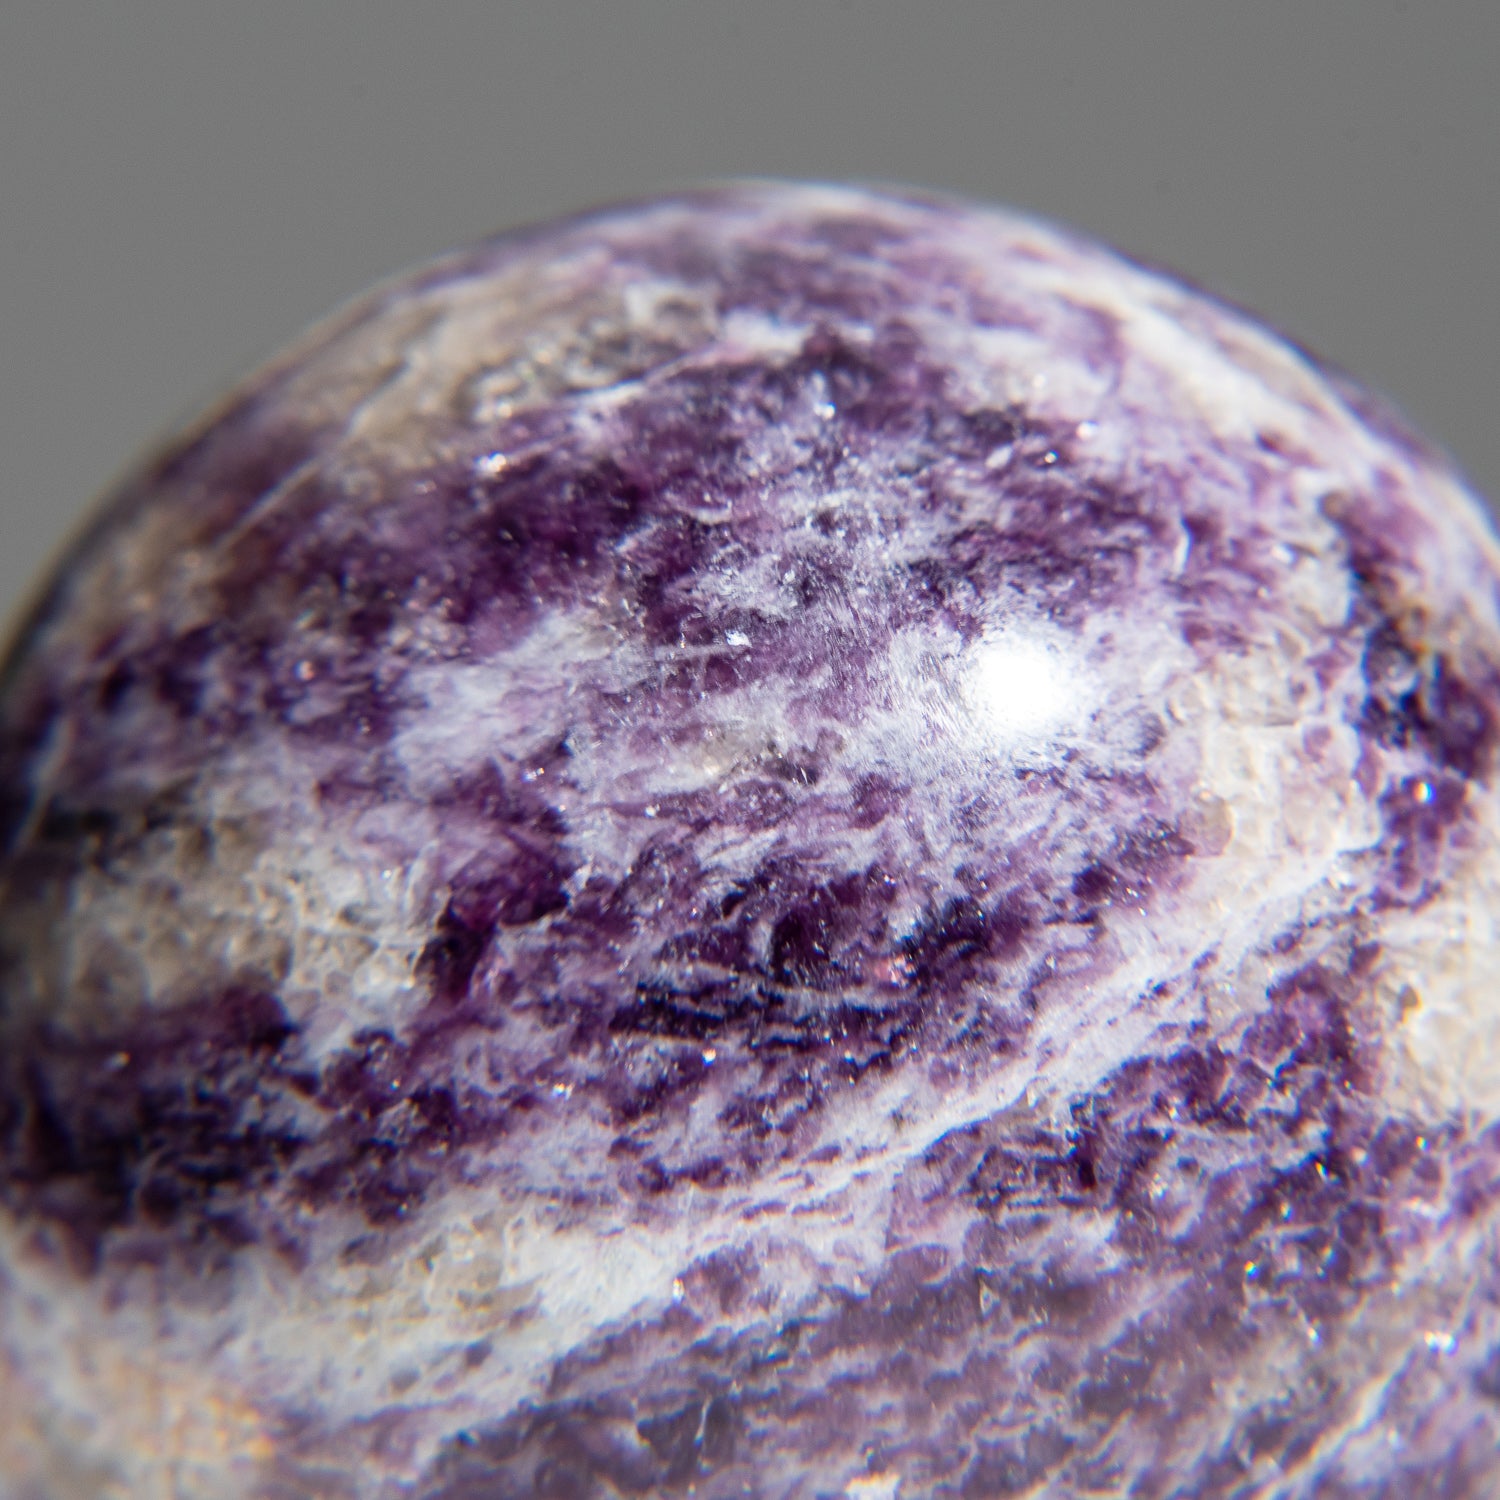 Genuine Polished Lepidolite (2.5") Sphere from Madagascar